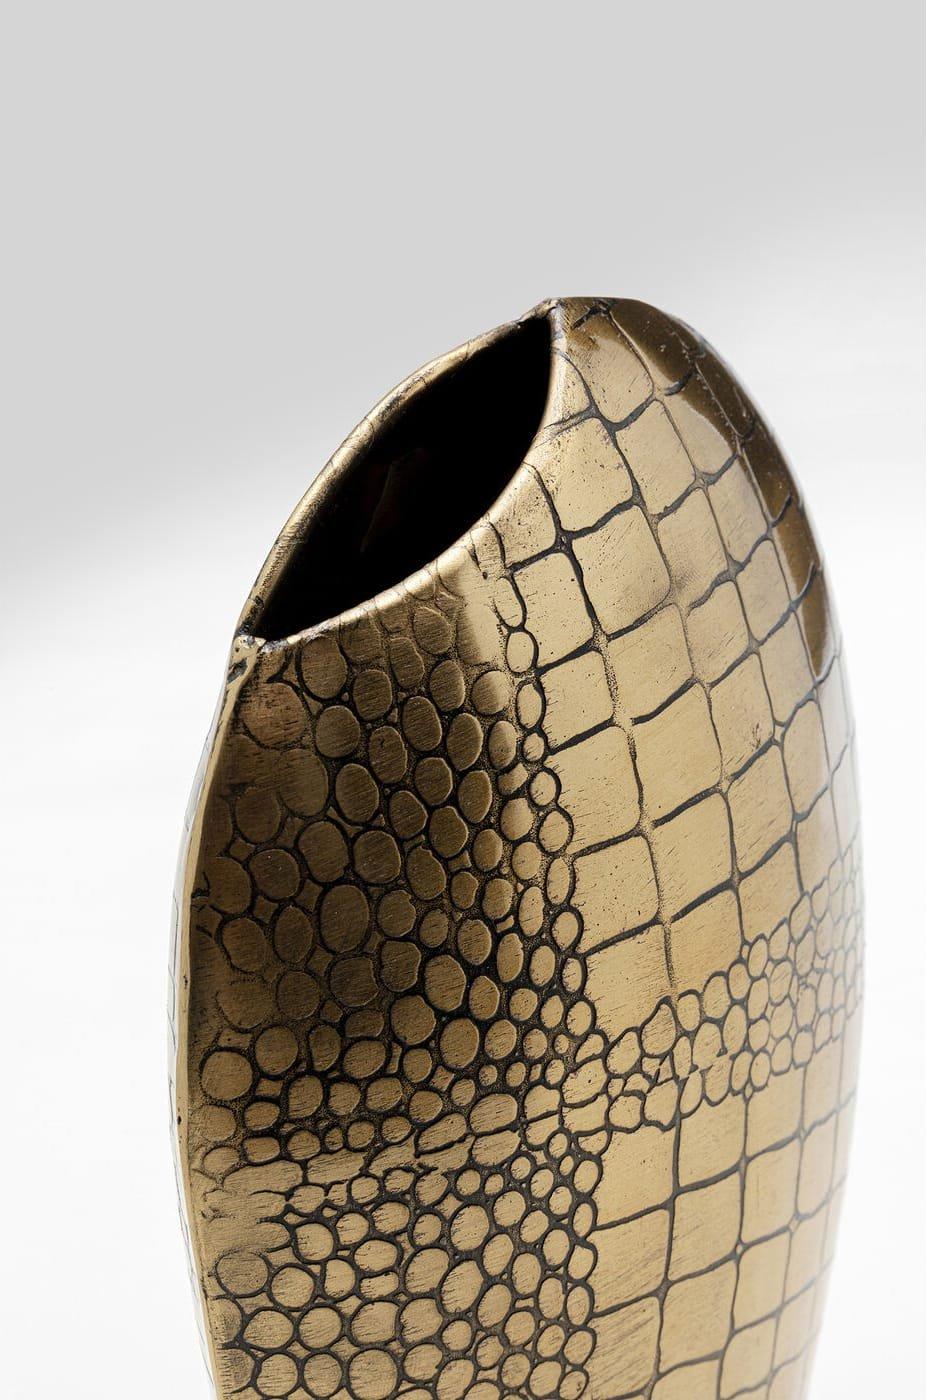 KARE Design Vase Serpente 21  